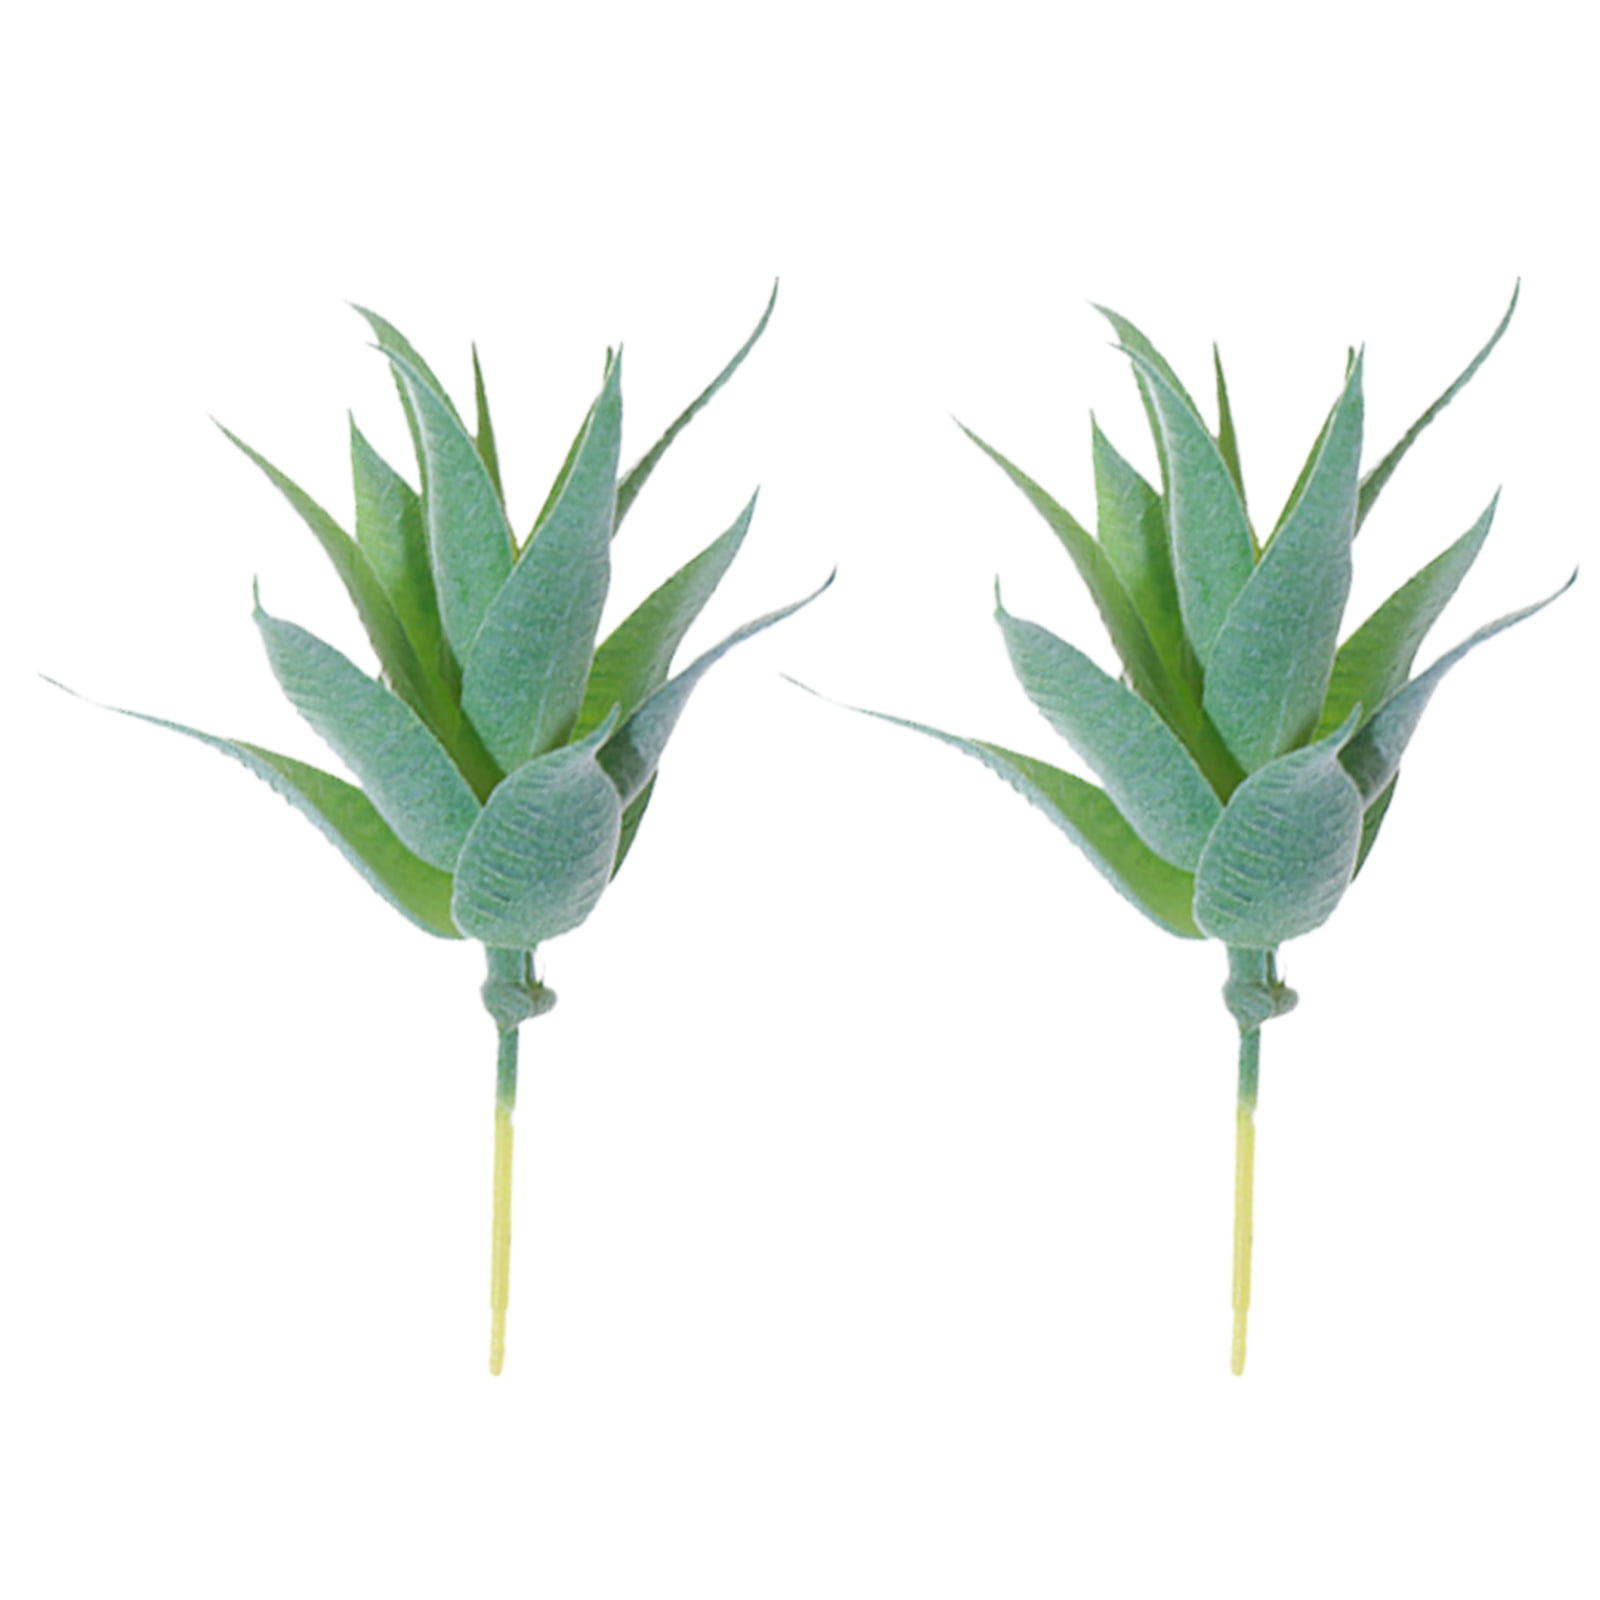 Fake Artificial Green Plant Aloe Vera Potted Simulation Home/Office Decor PVC 